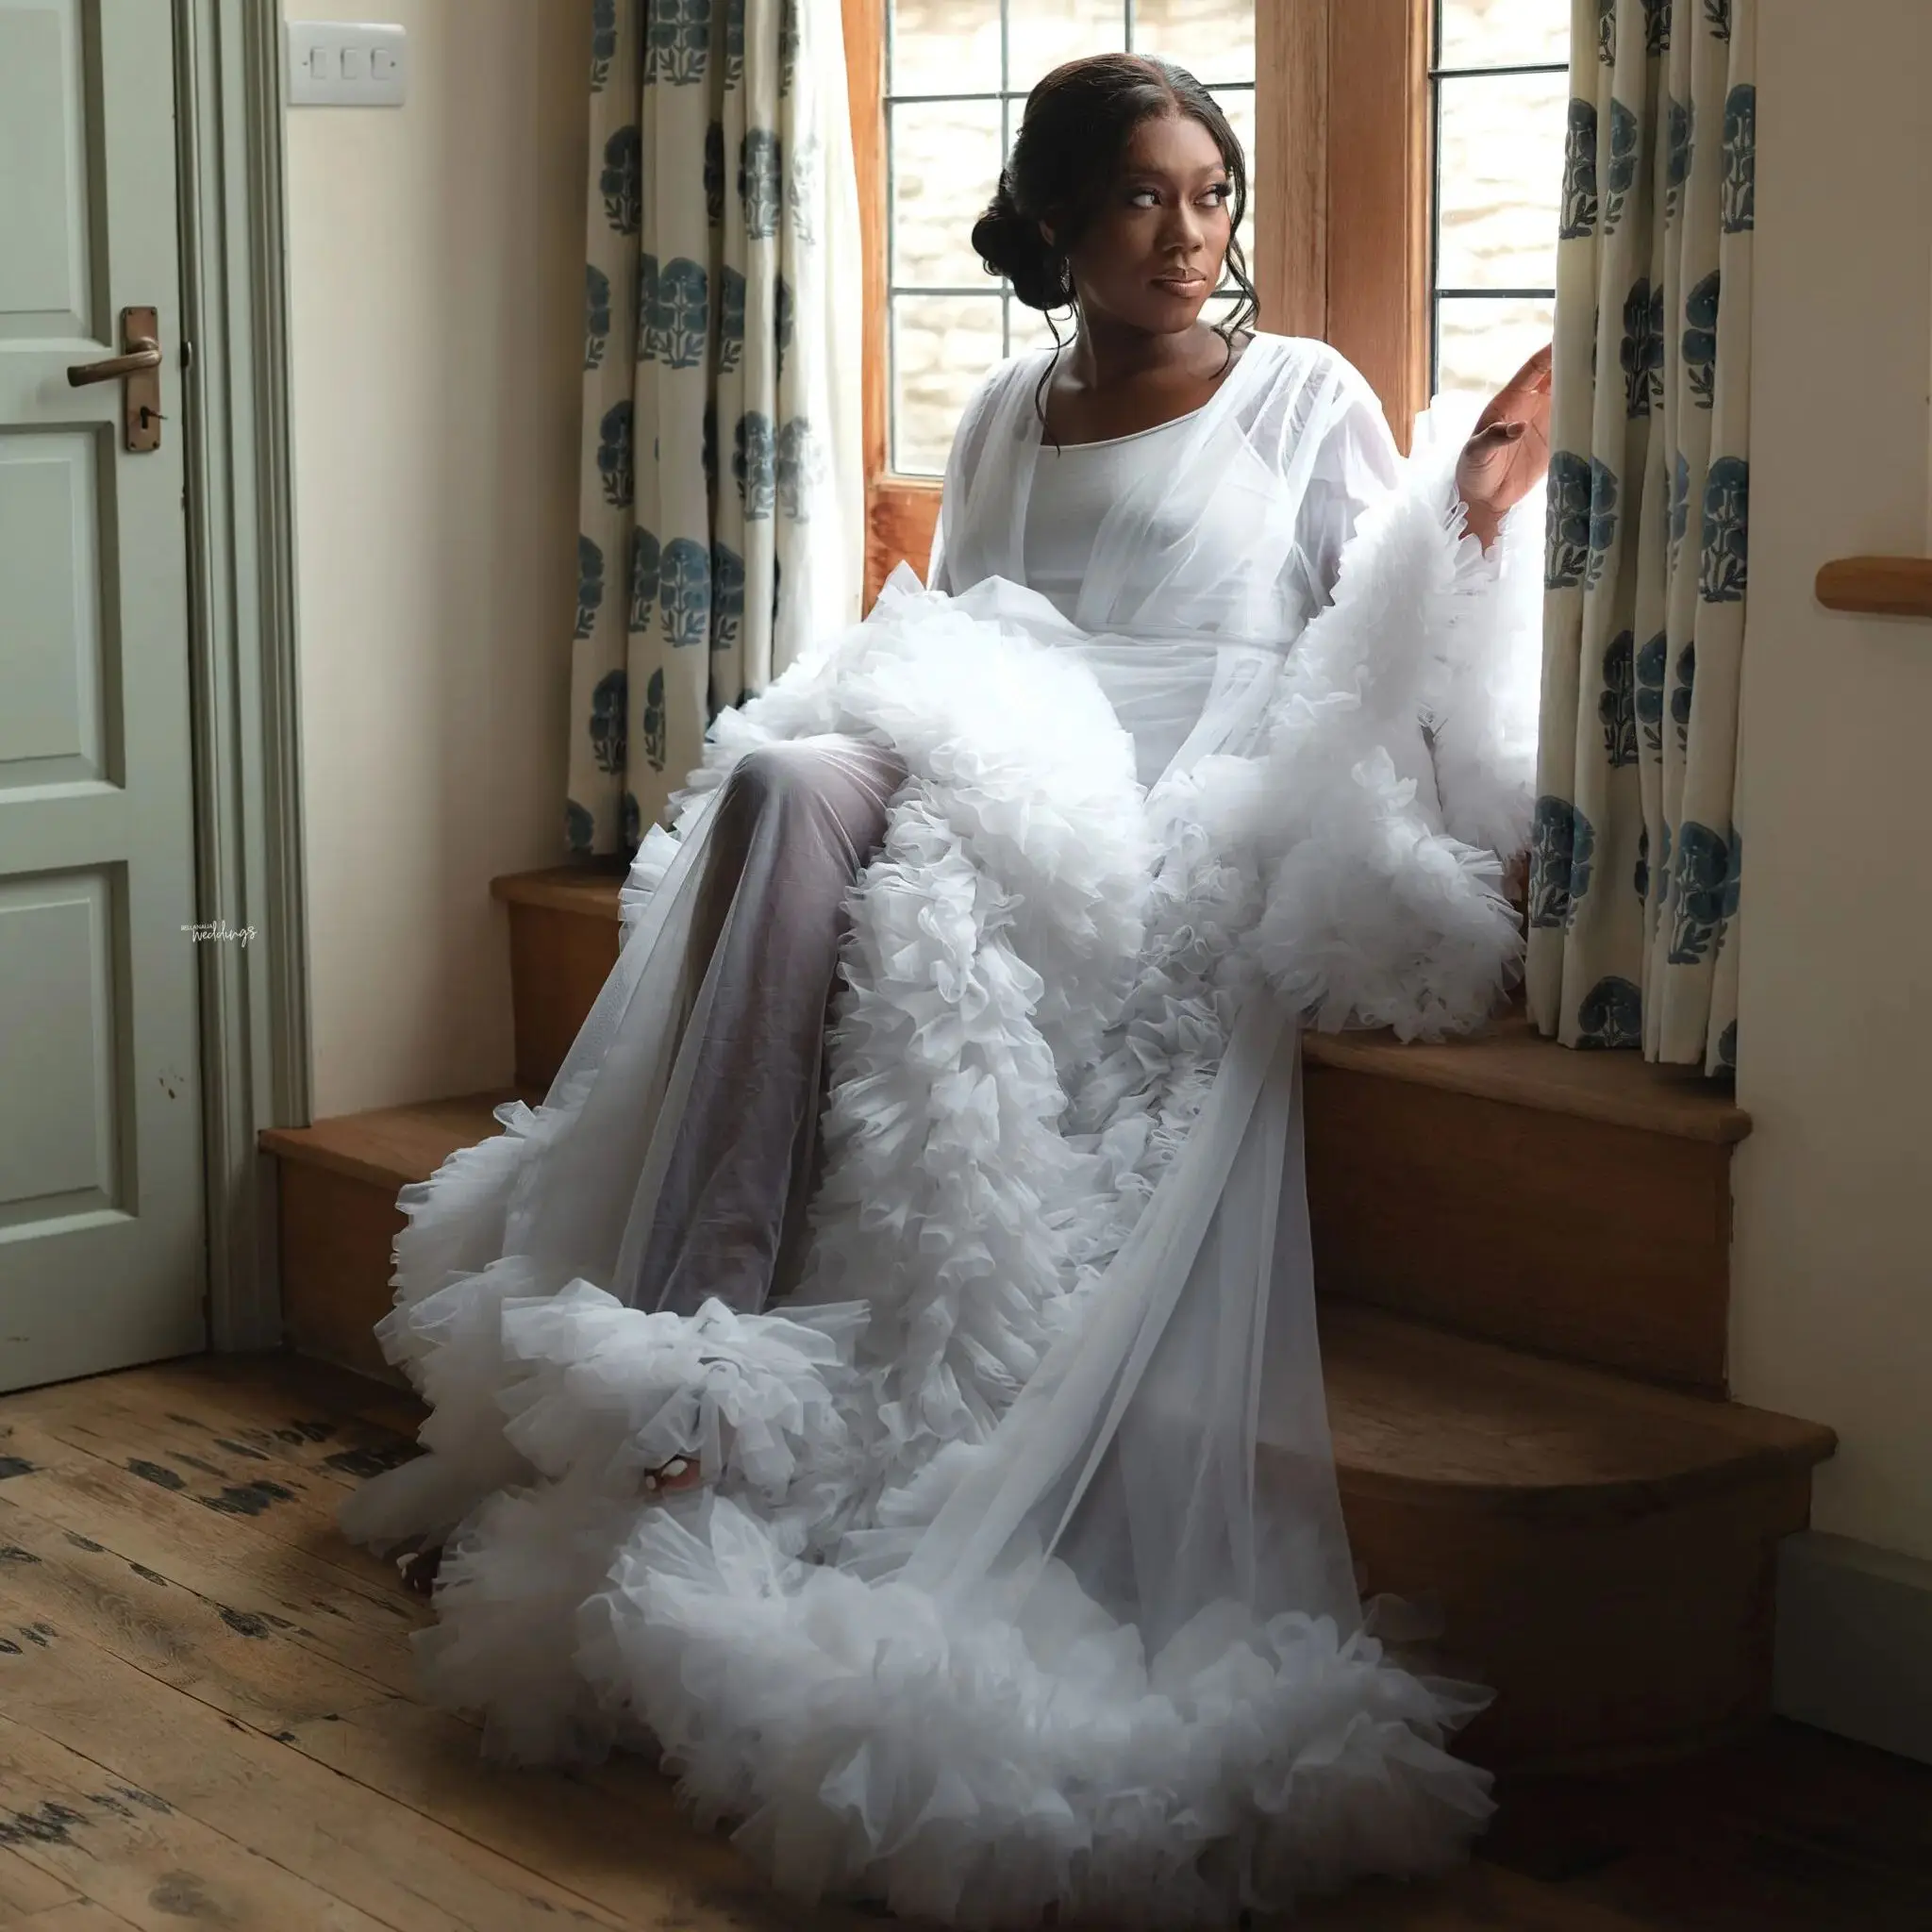 

White Ruffles Wedding Robe Maxi Bride Bathrobe Lingerie Women Gowns Tulle Long Sleeve Pajamas Dress For Engagement Photo Shoot